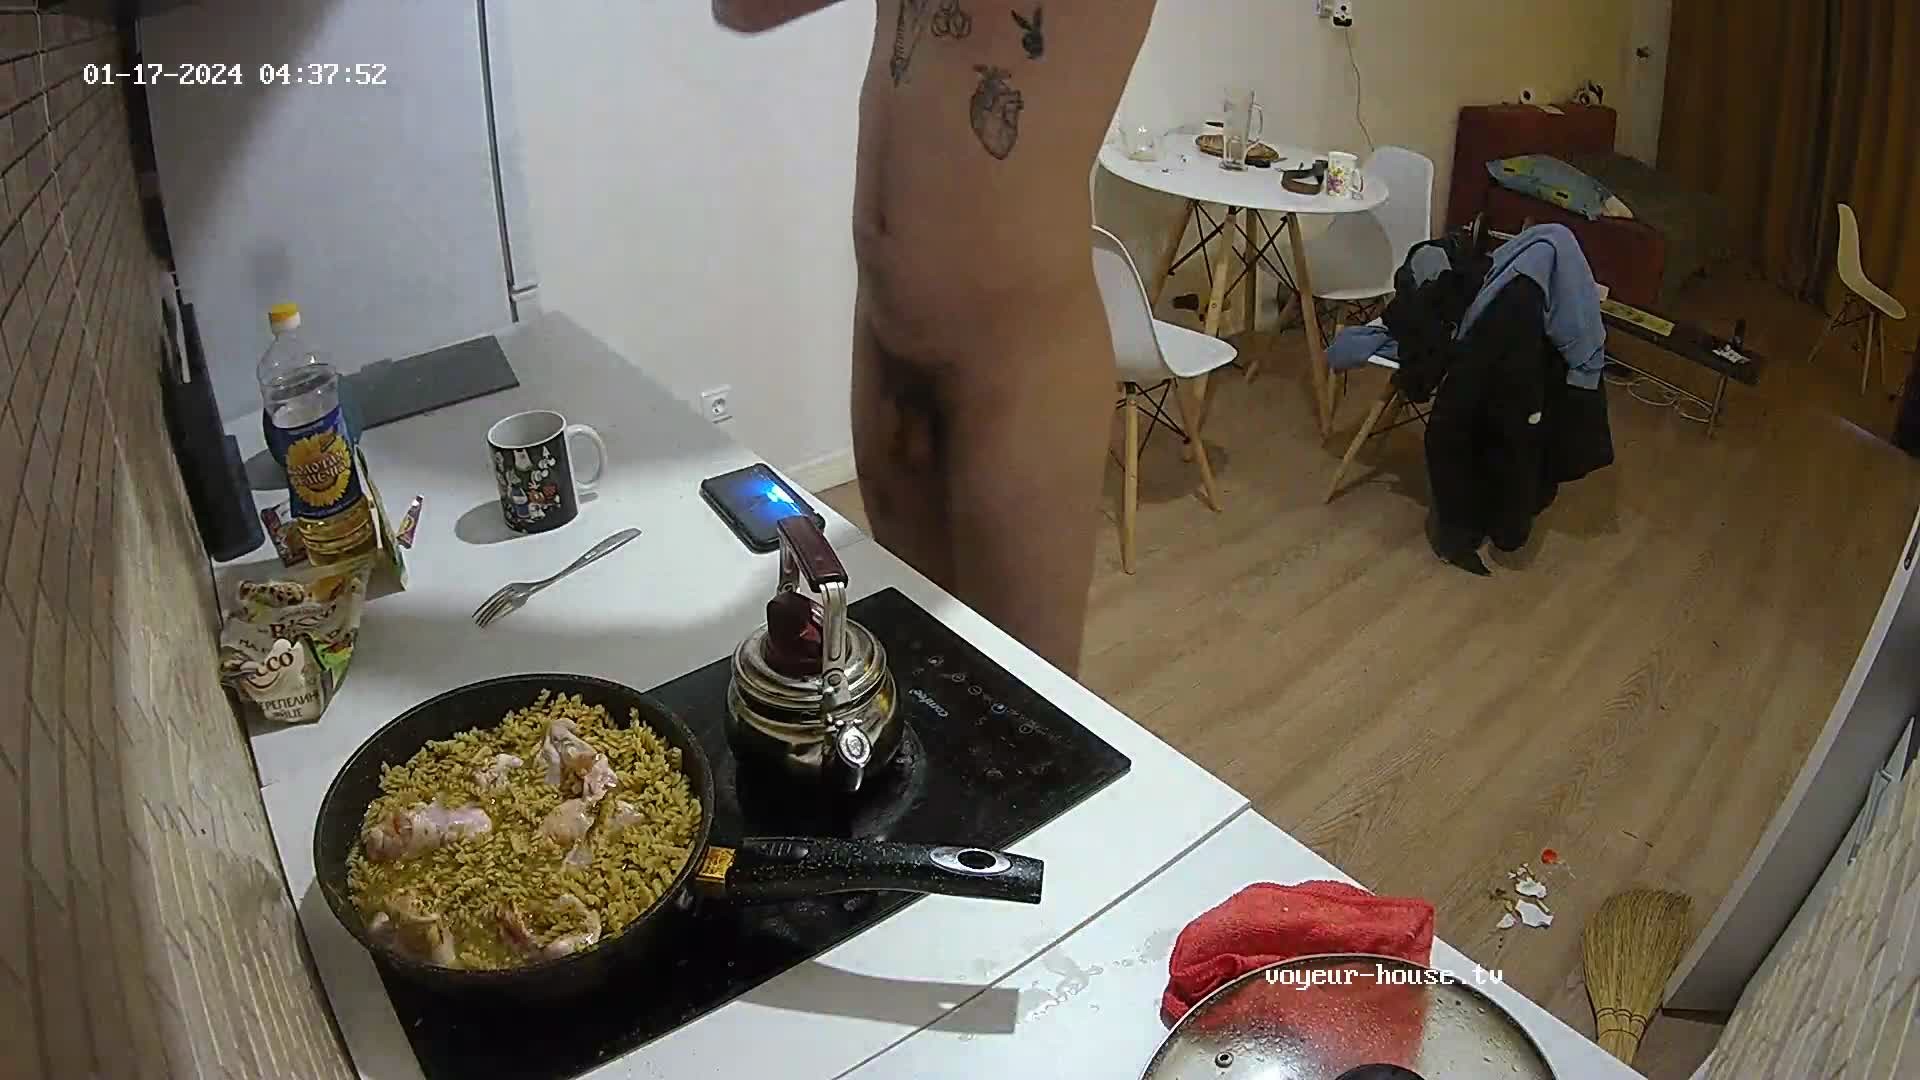 Artem the naked chef 17 Jan 2024